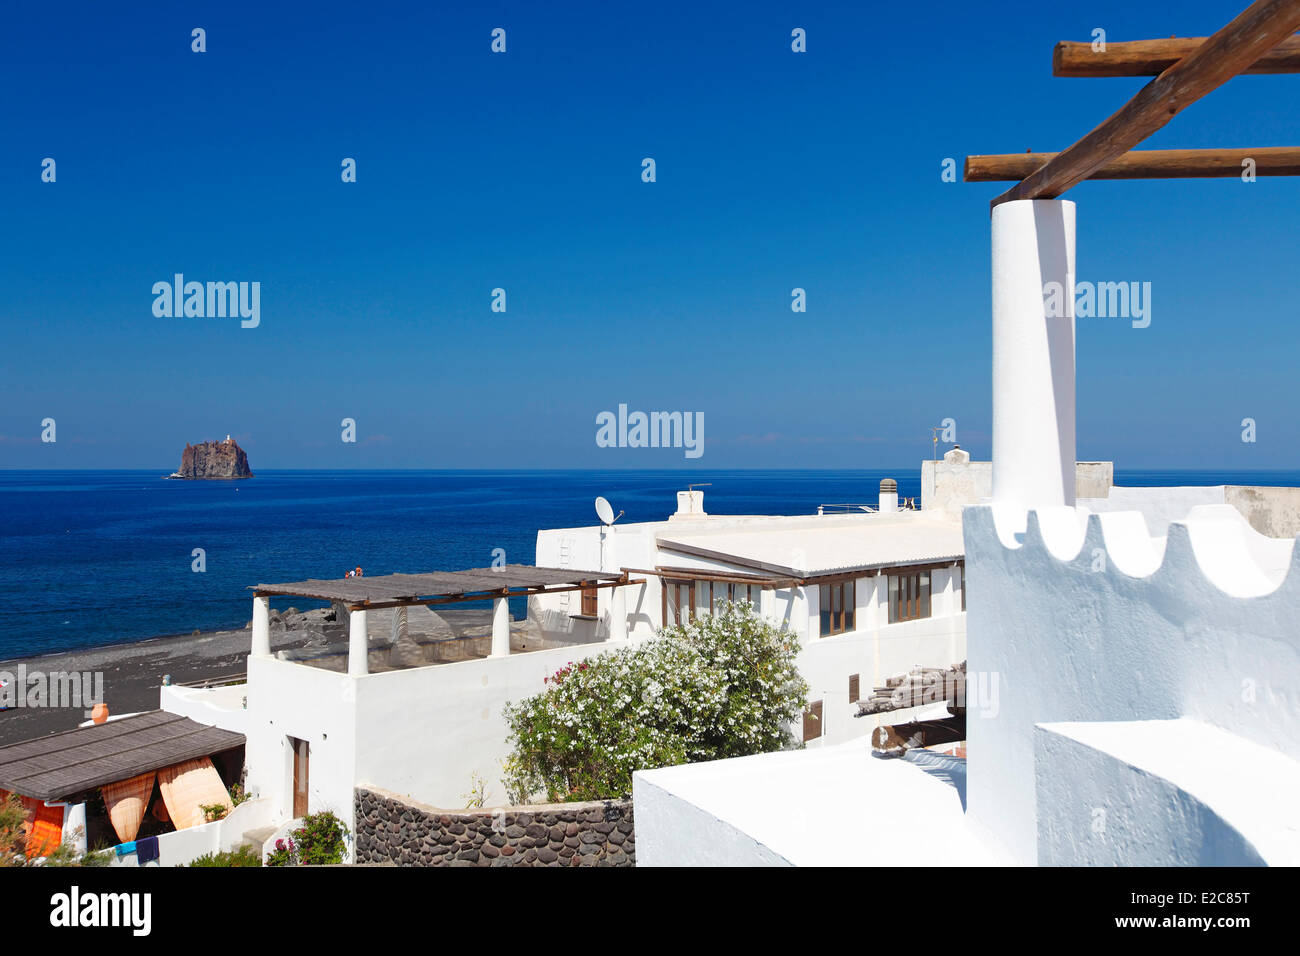 Italien, Sizilien, Äolischen Inseln, Weltkulturerbe der UNESCO, Insel Stromboli, Terrassen mit Inselchen Strombolicchio Stockfoto